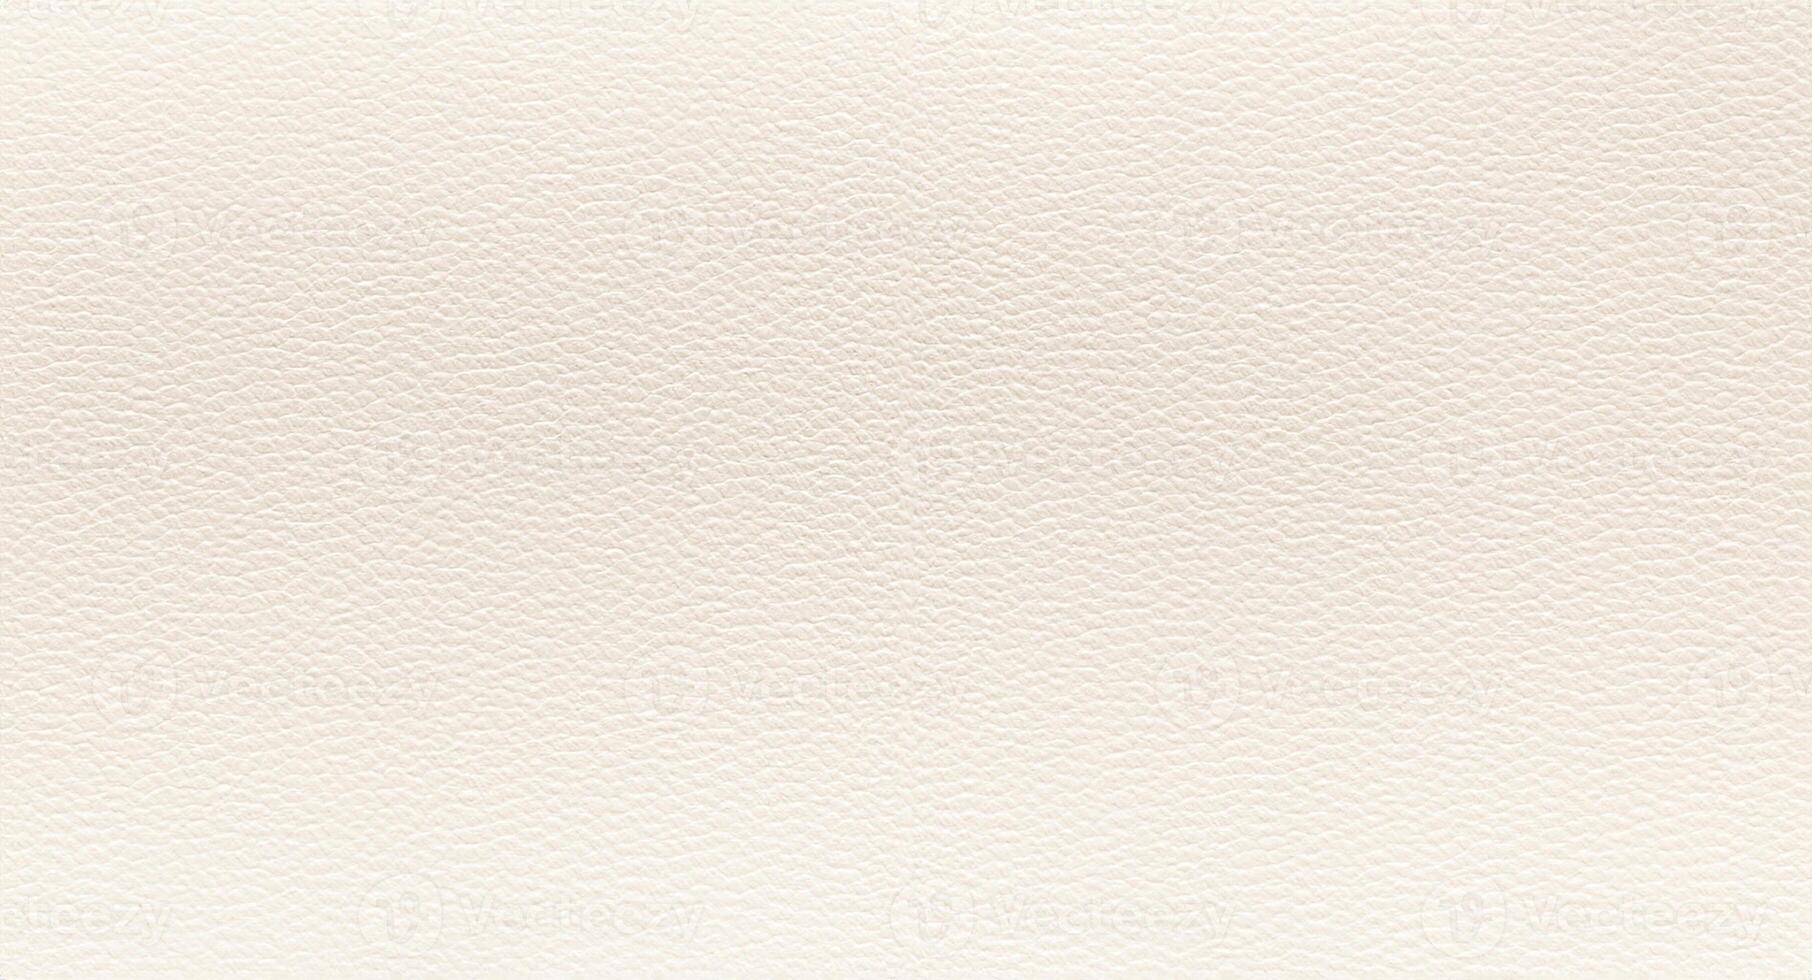 fundo de luxo de textura de couro branco foto